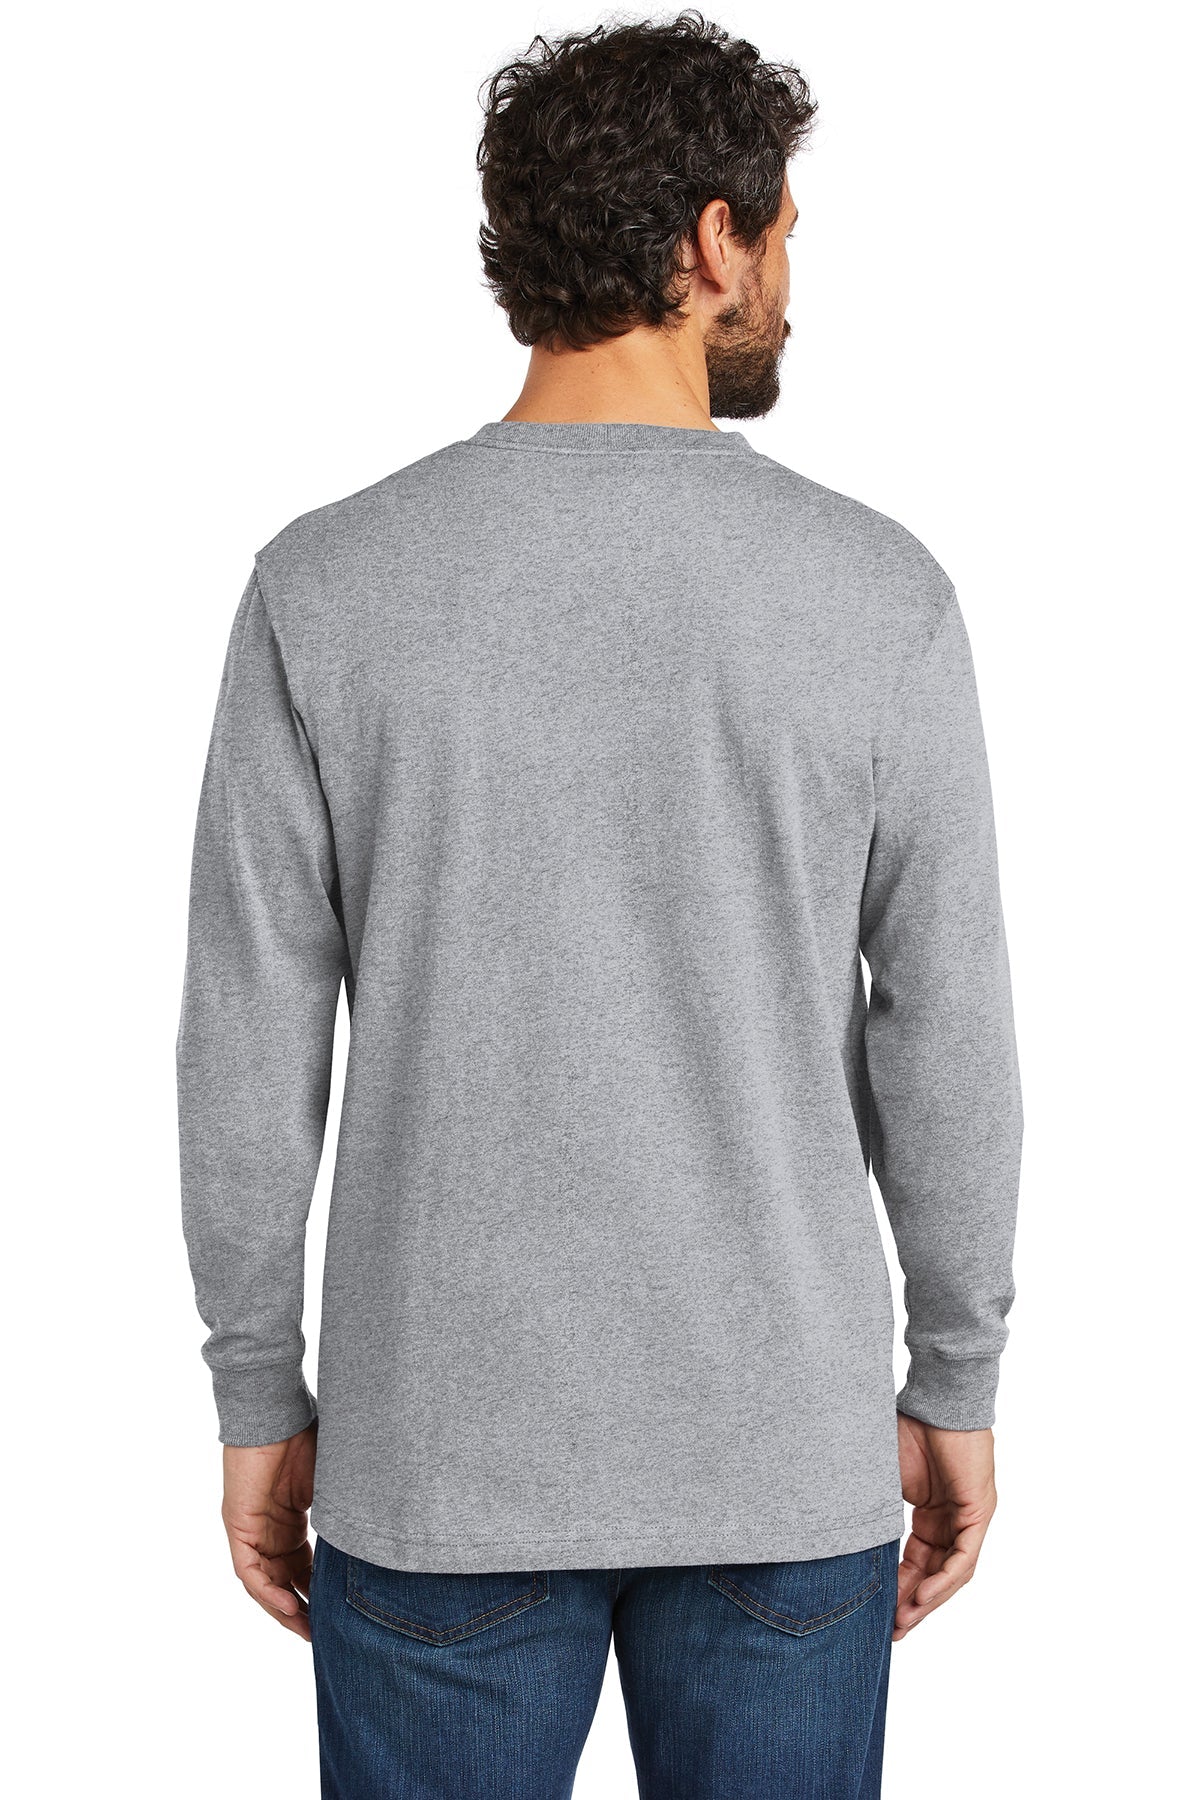 CTK126 Carhartt Workwear Pocket Long Sleeve T-Shirt